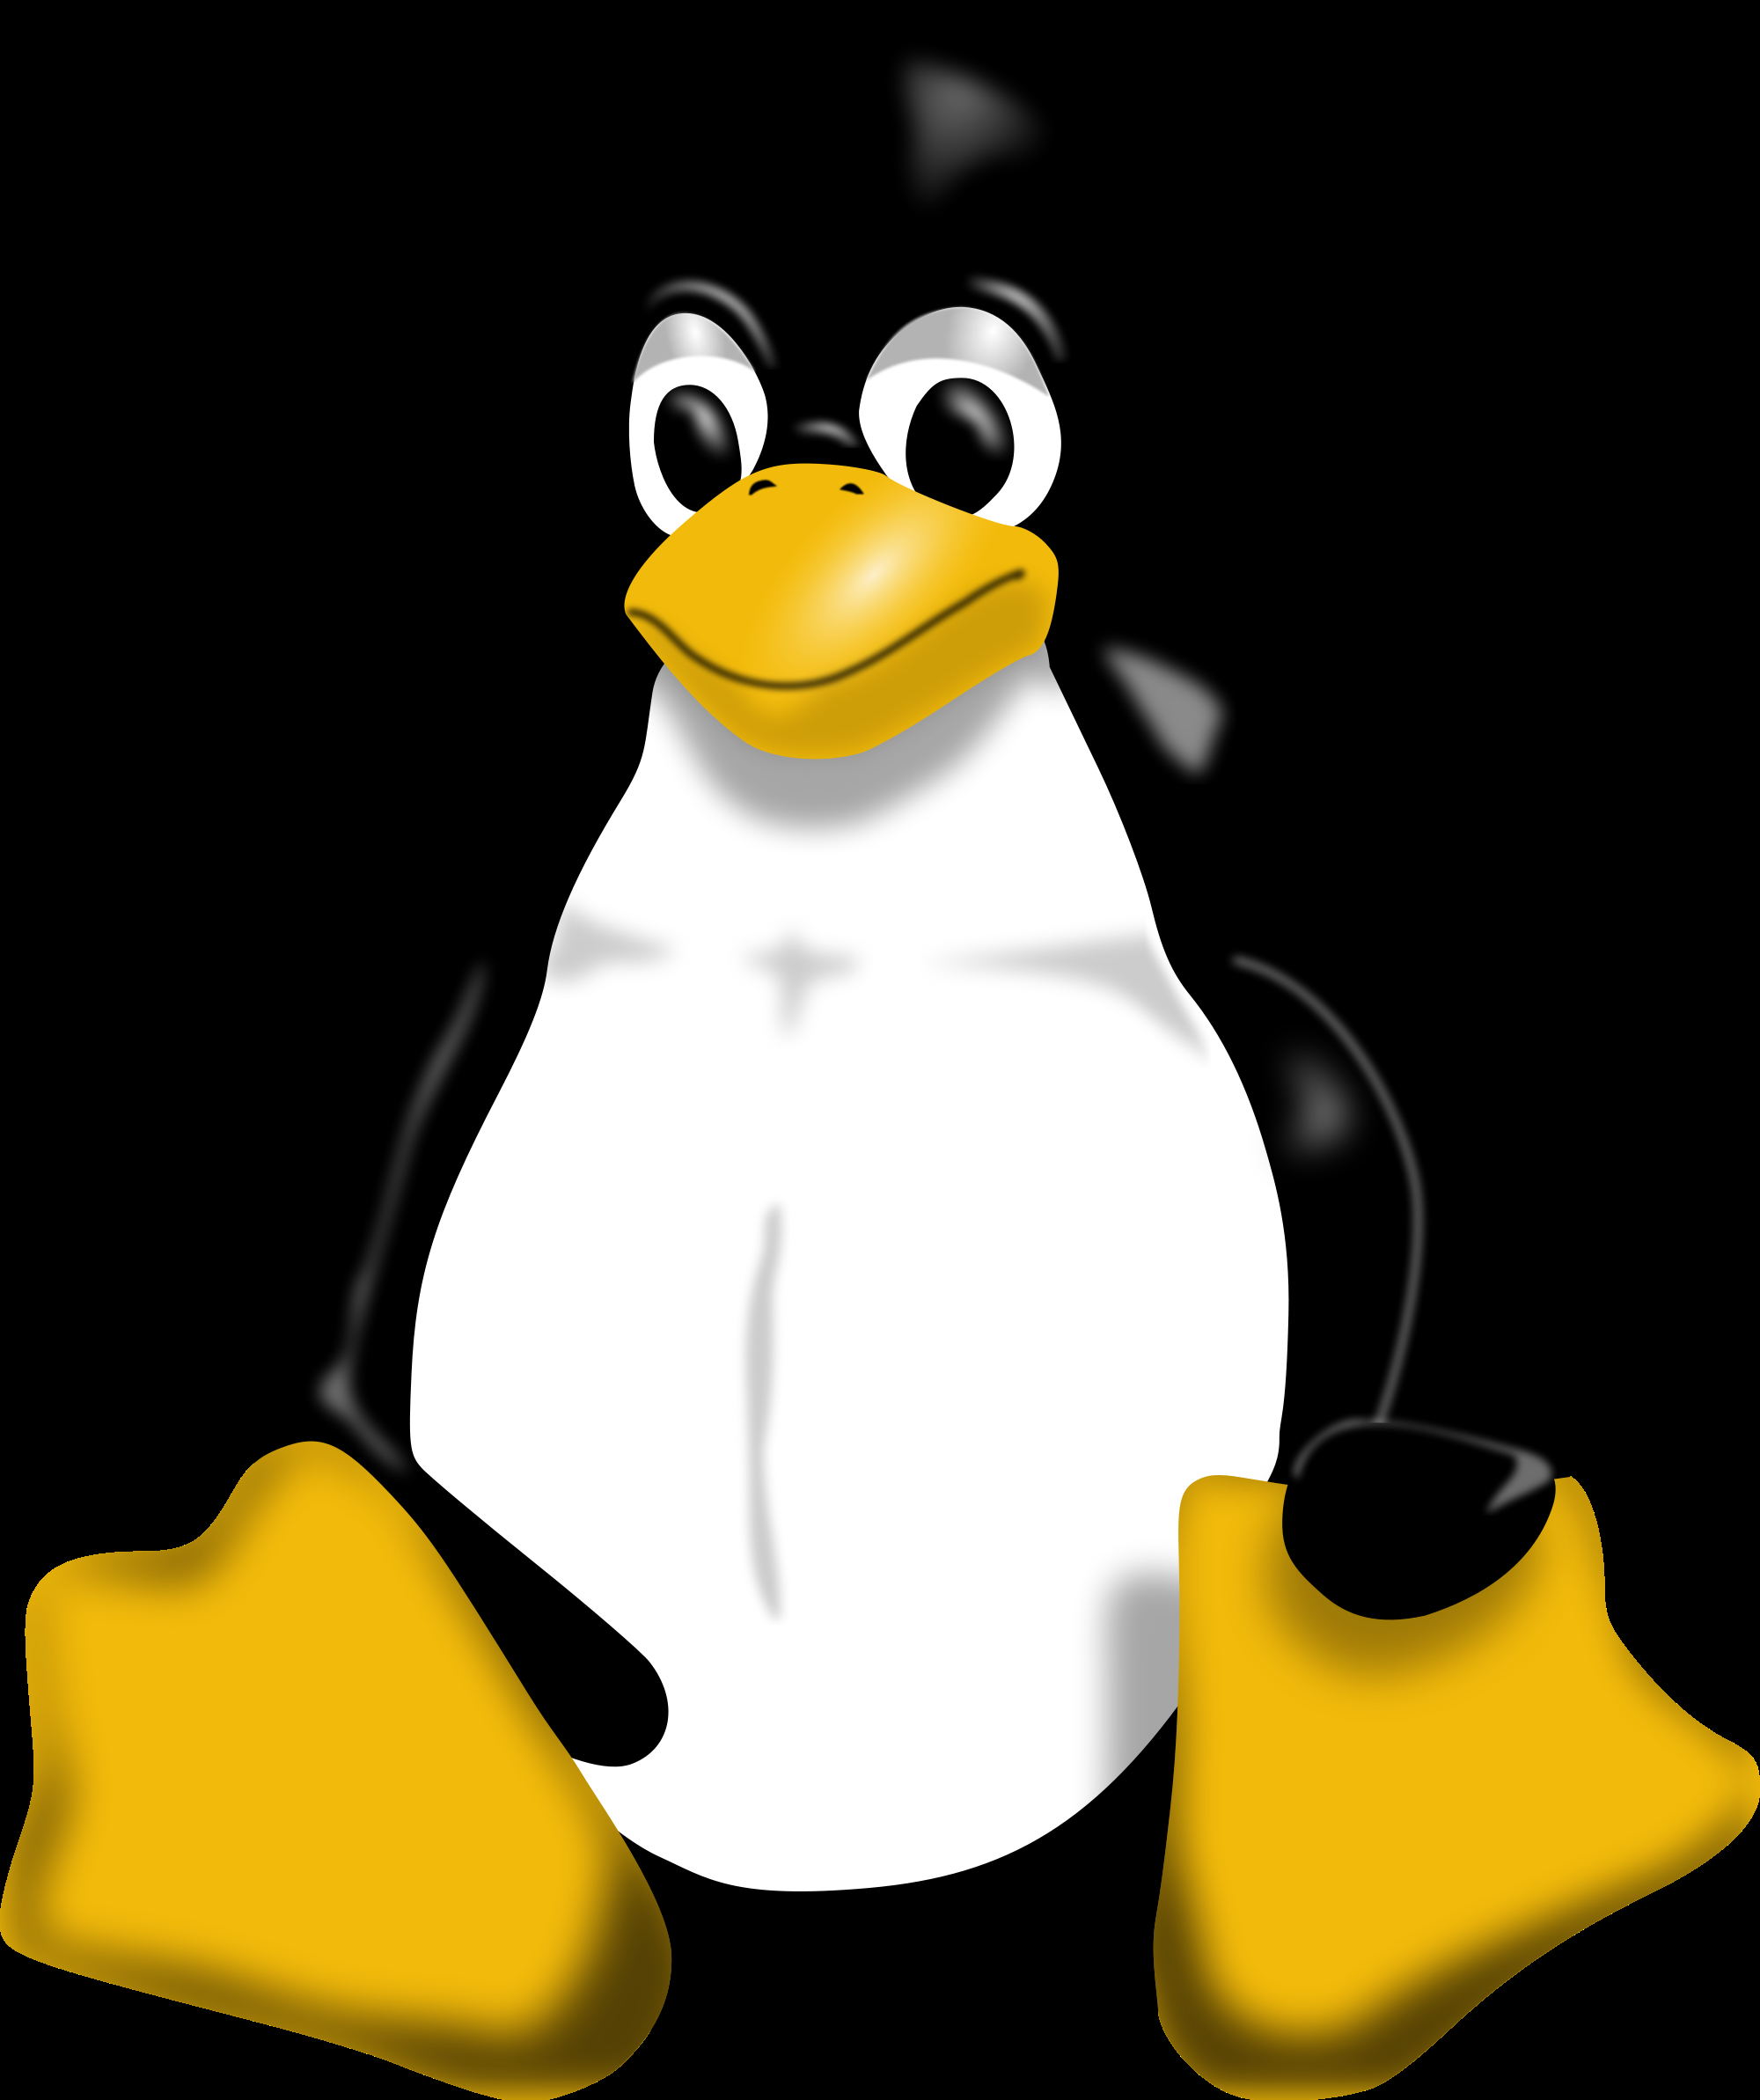 Bmp picture. Рисунки с расширением bmp. Линукс. Пингвин линукс. Tux линукс.